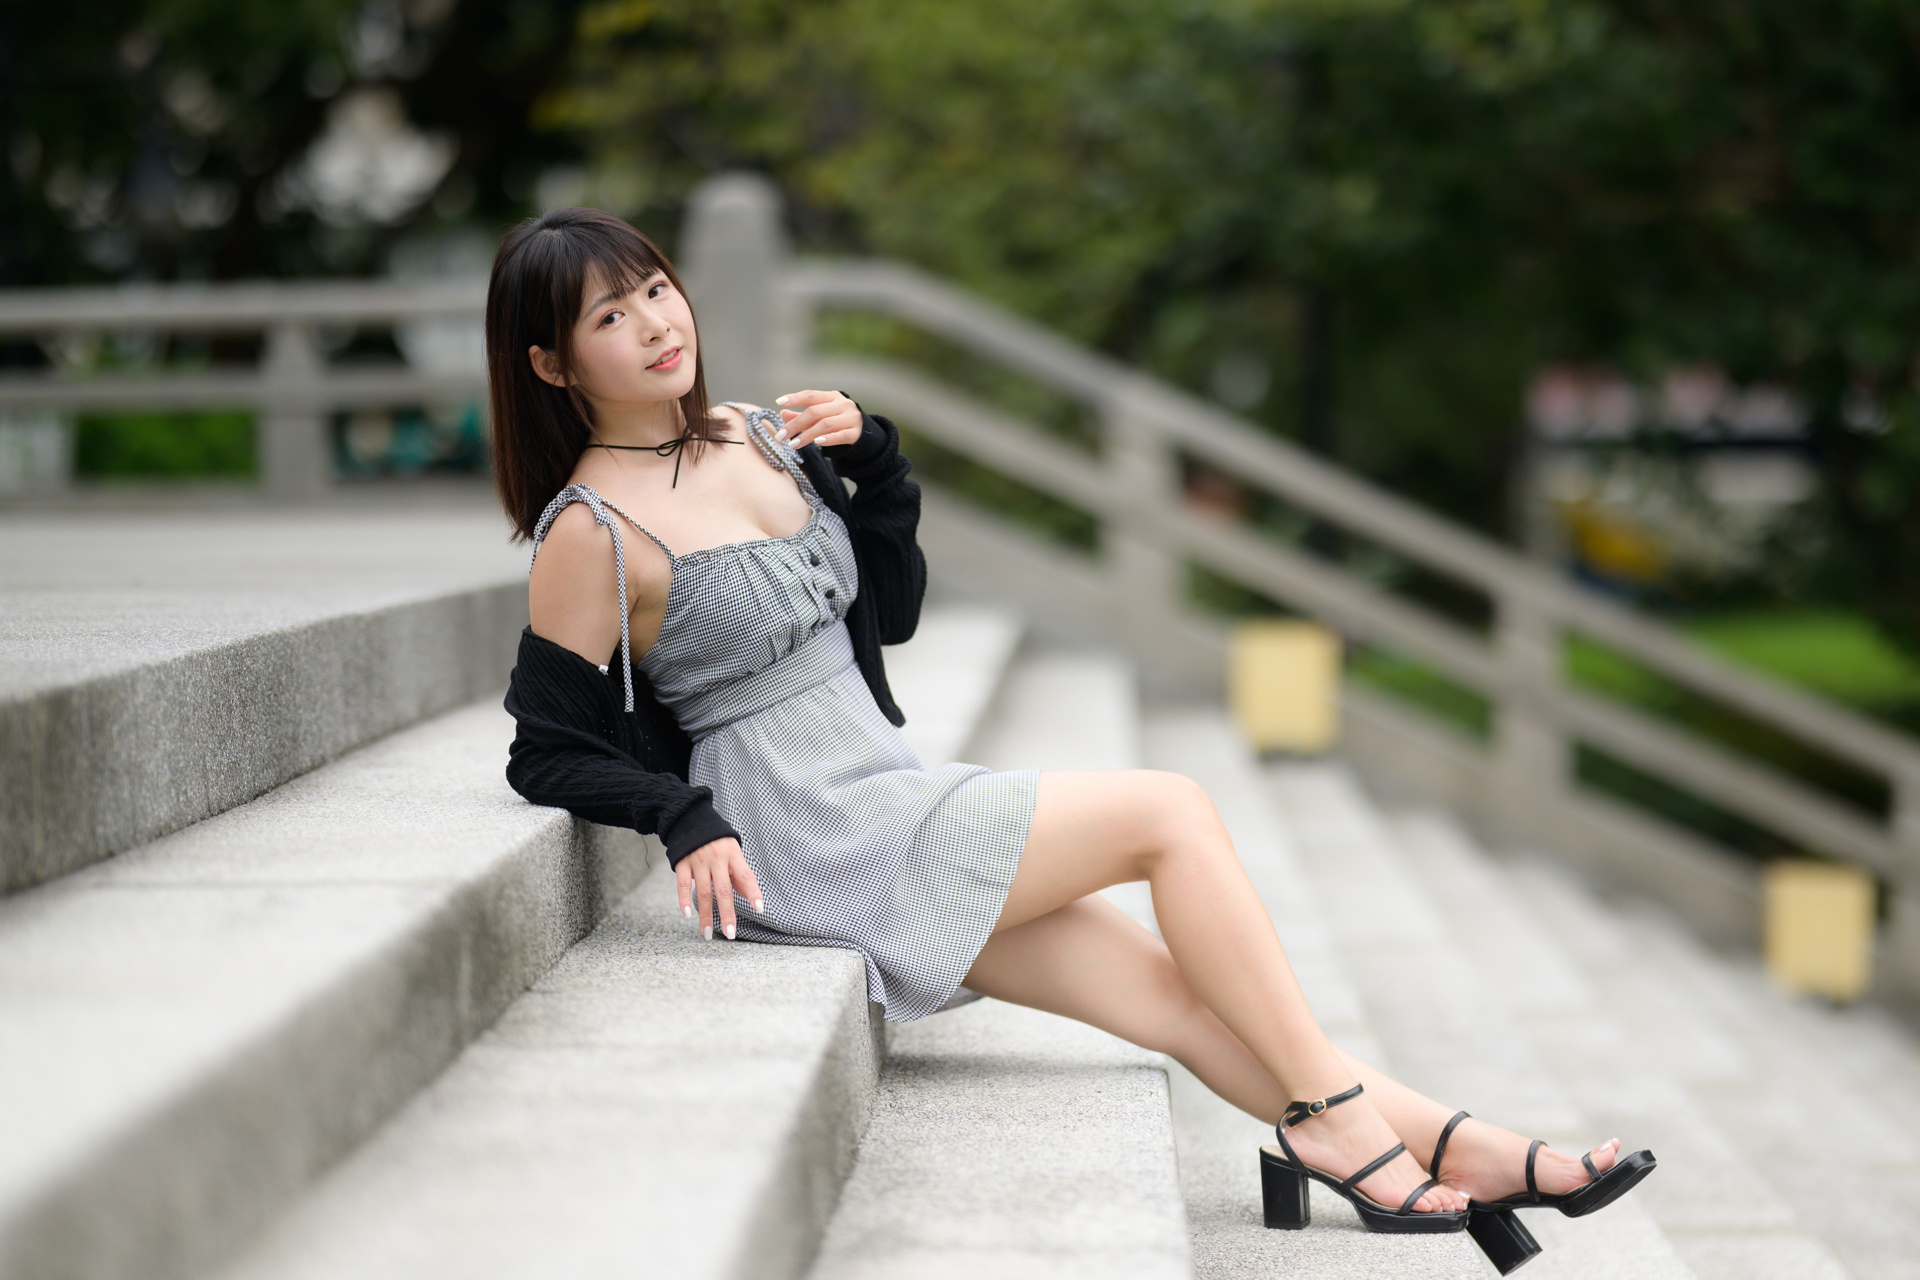 Asian Model Women Long Hair Dark Hair Sitting Barefoot Sandal Stairs 1920x1280